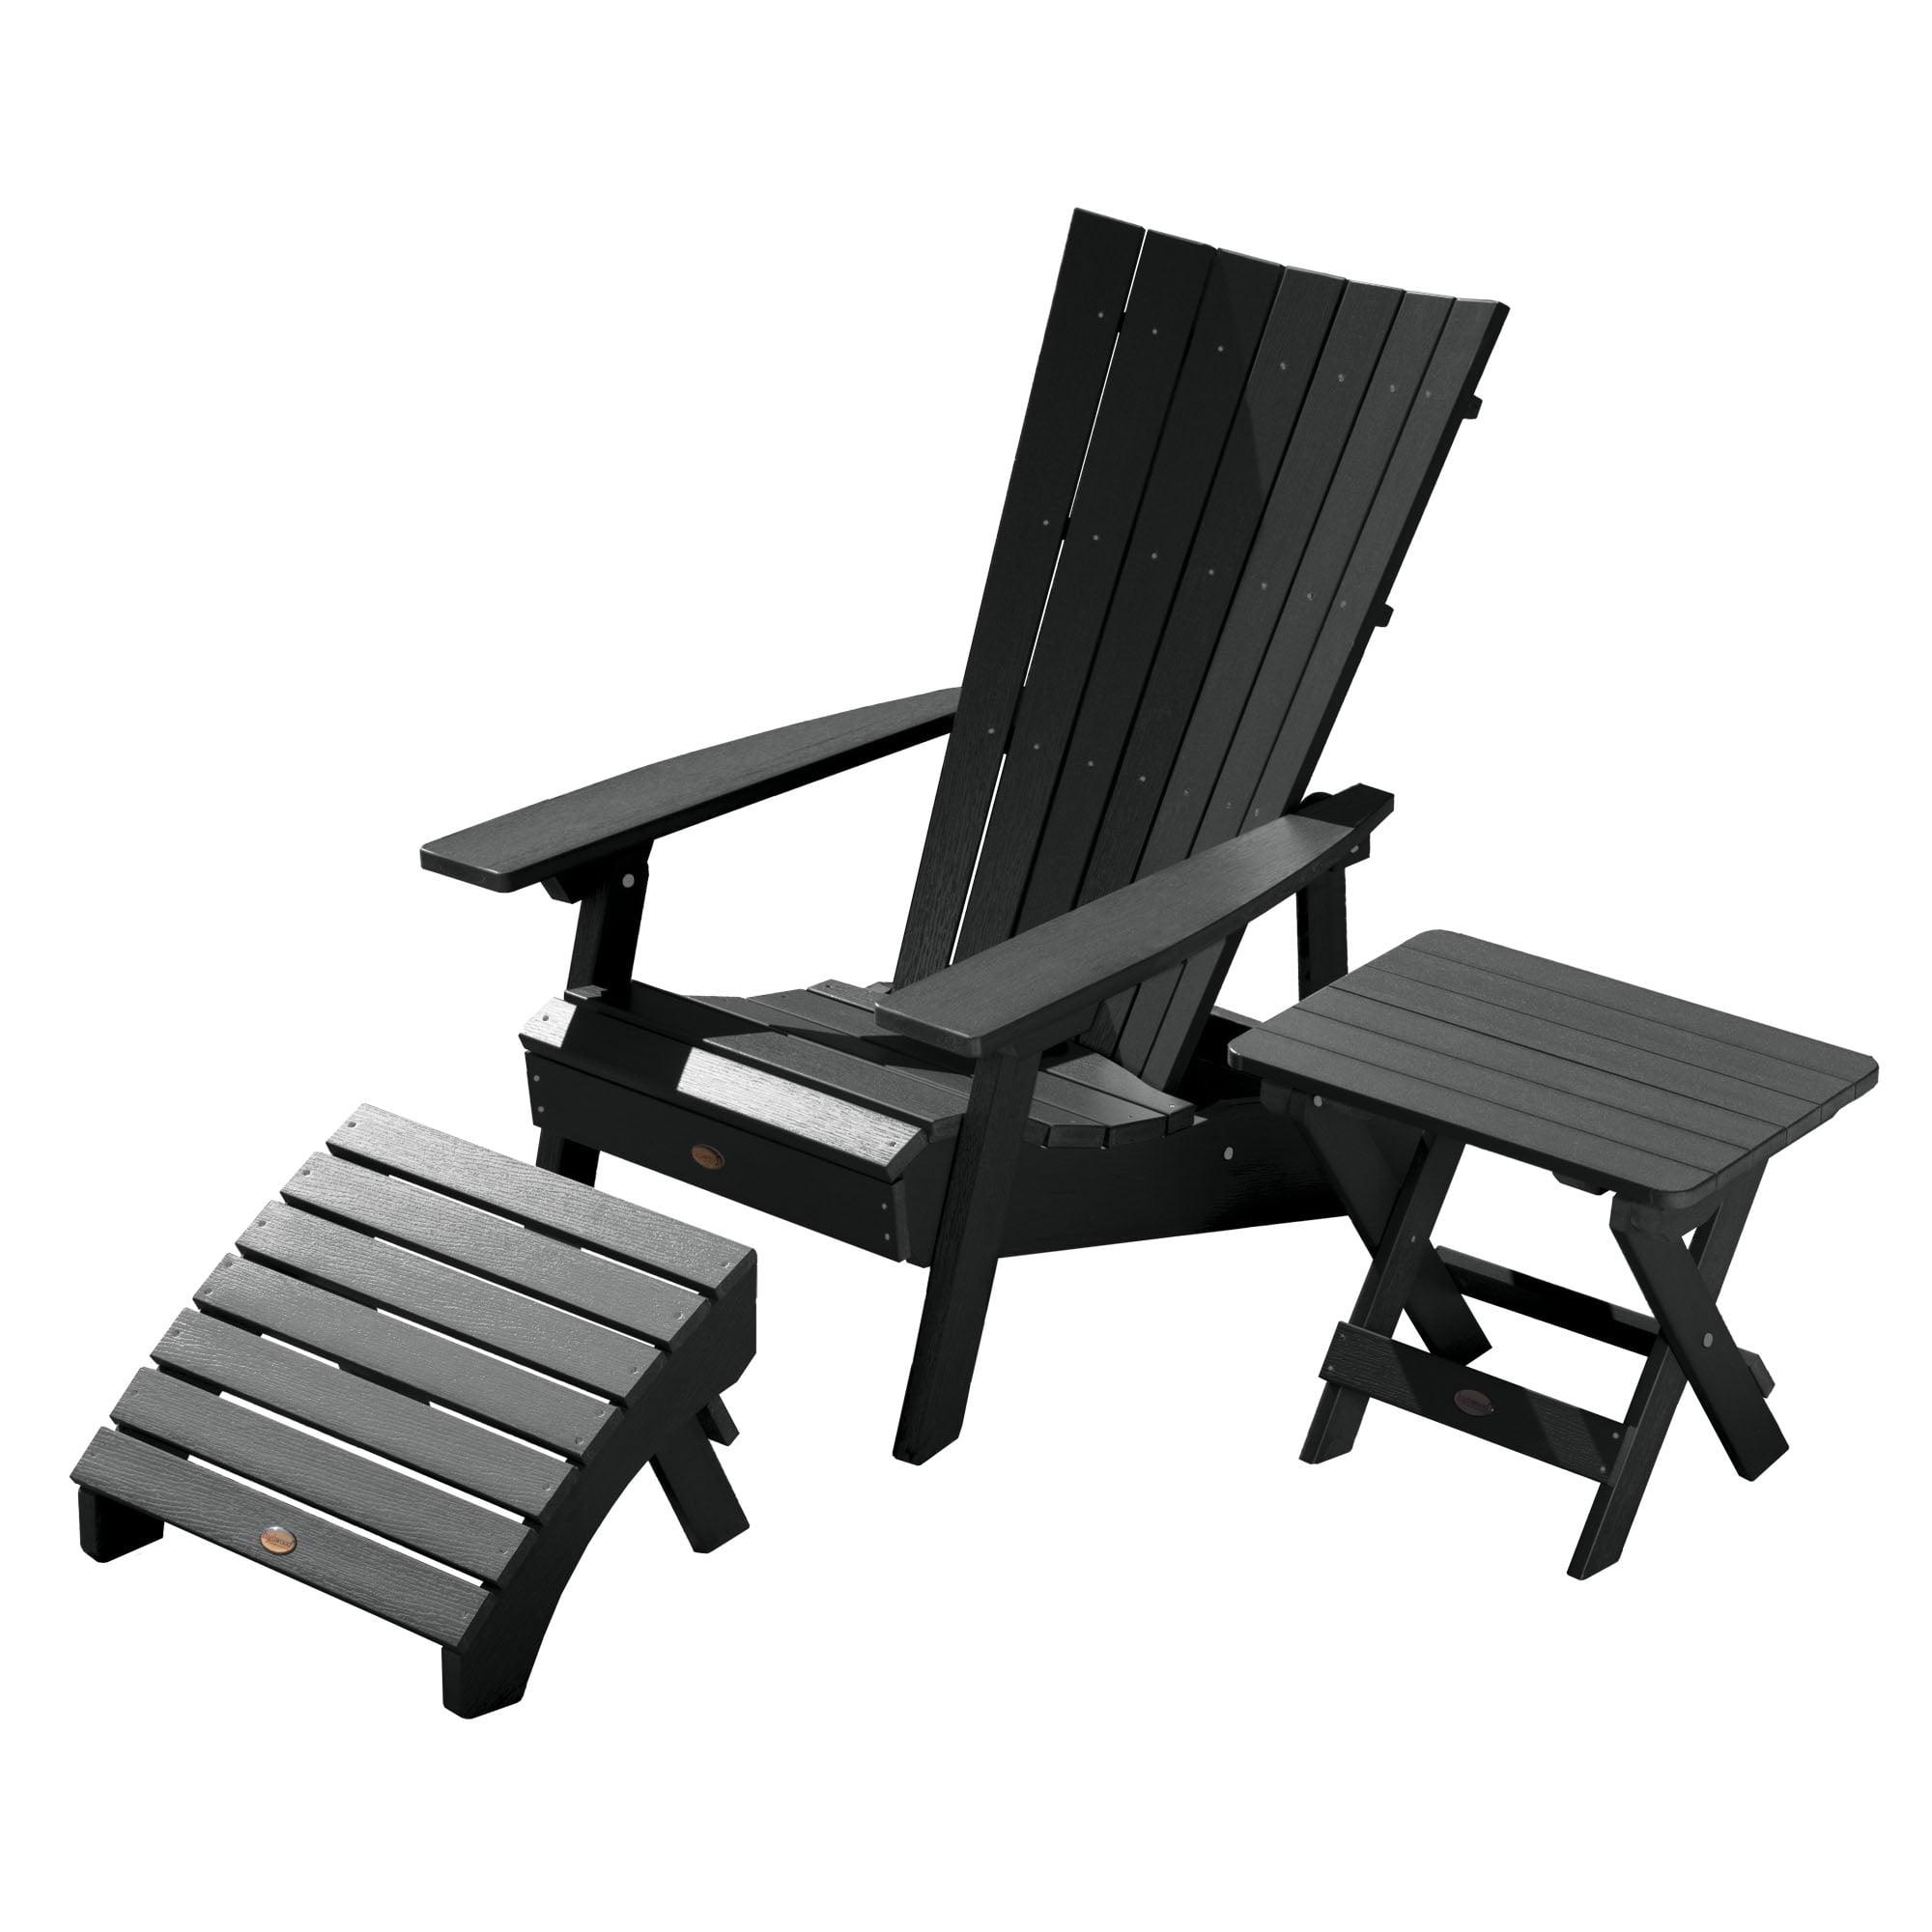 The Adirondack Black Folding Plastic Outdoor Chair